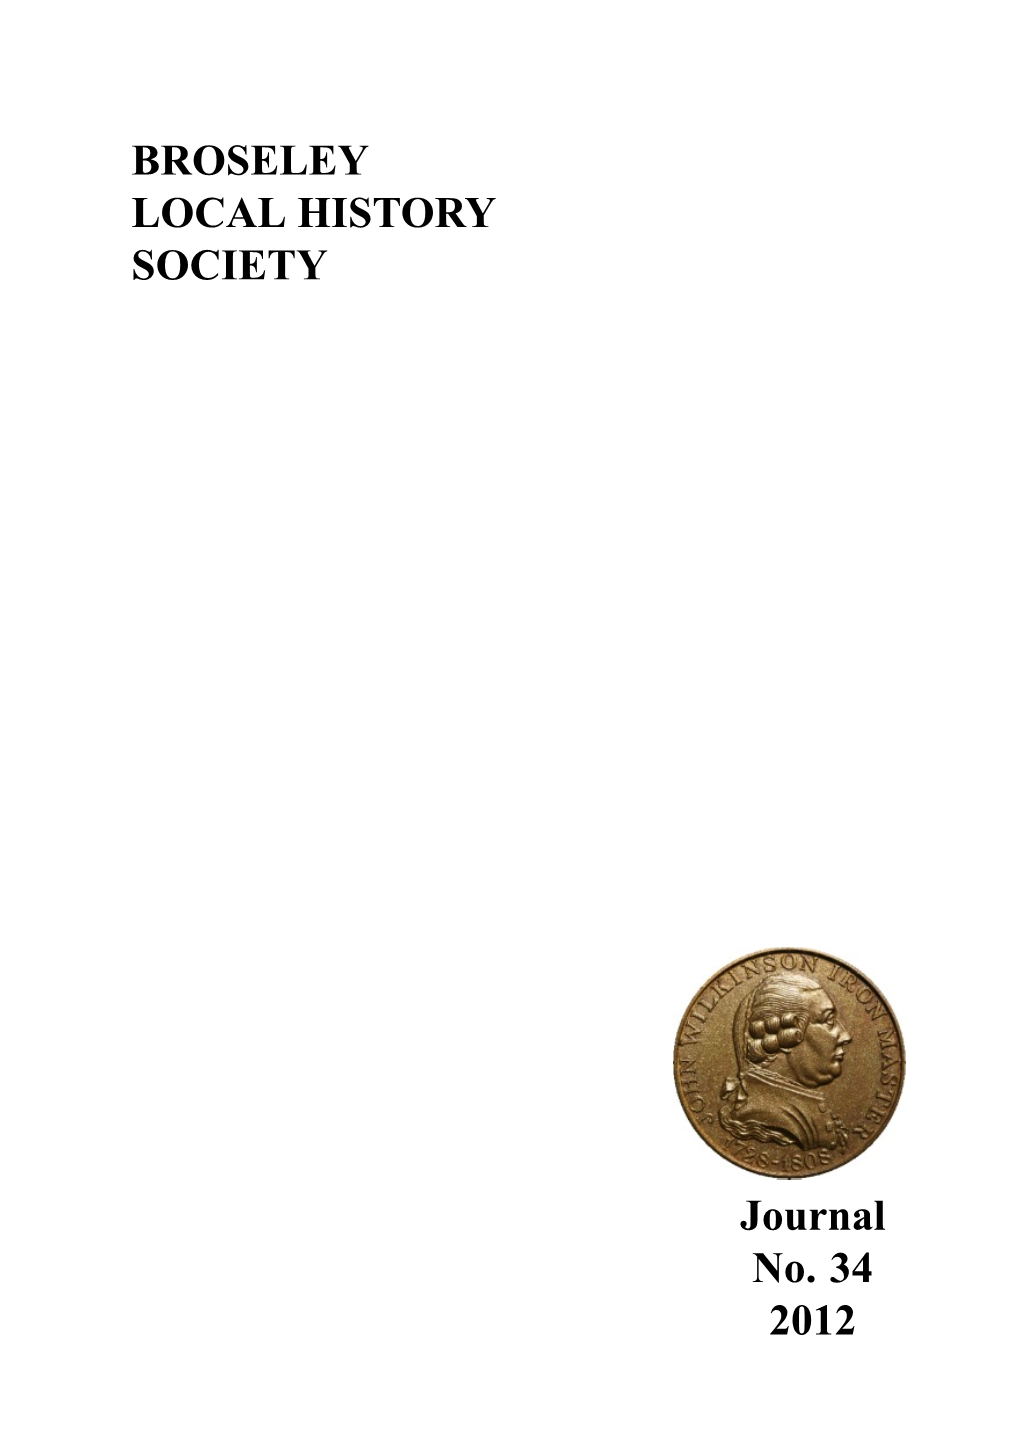 BROSELEY LOCAL HISTORY SOCIETY Journal No. 34 2012